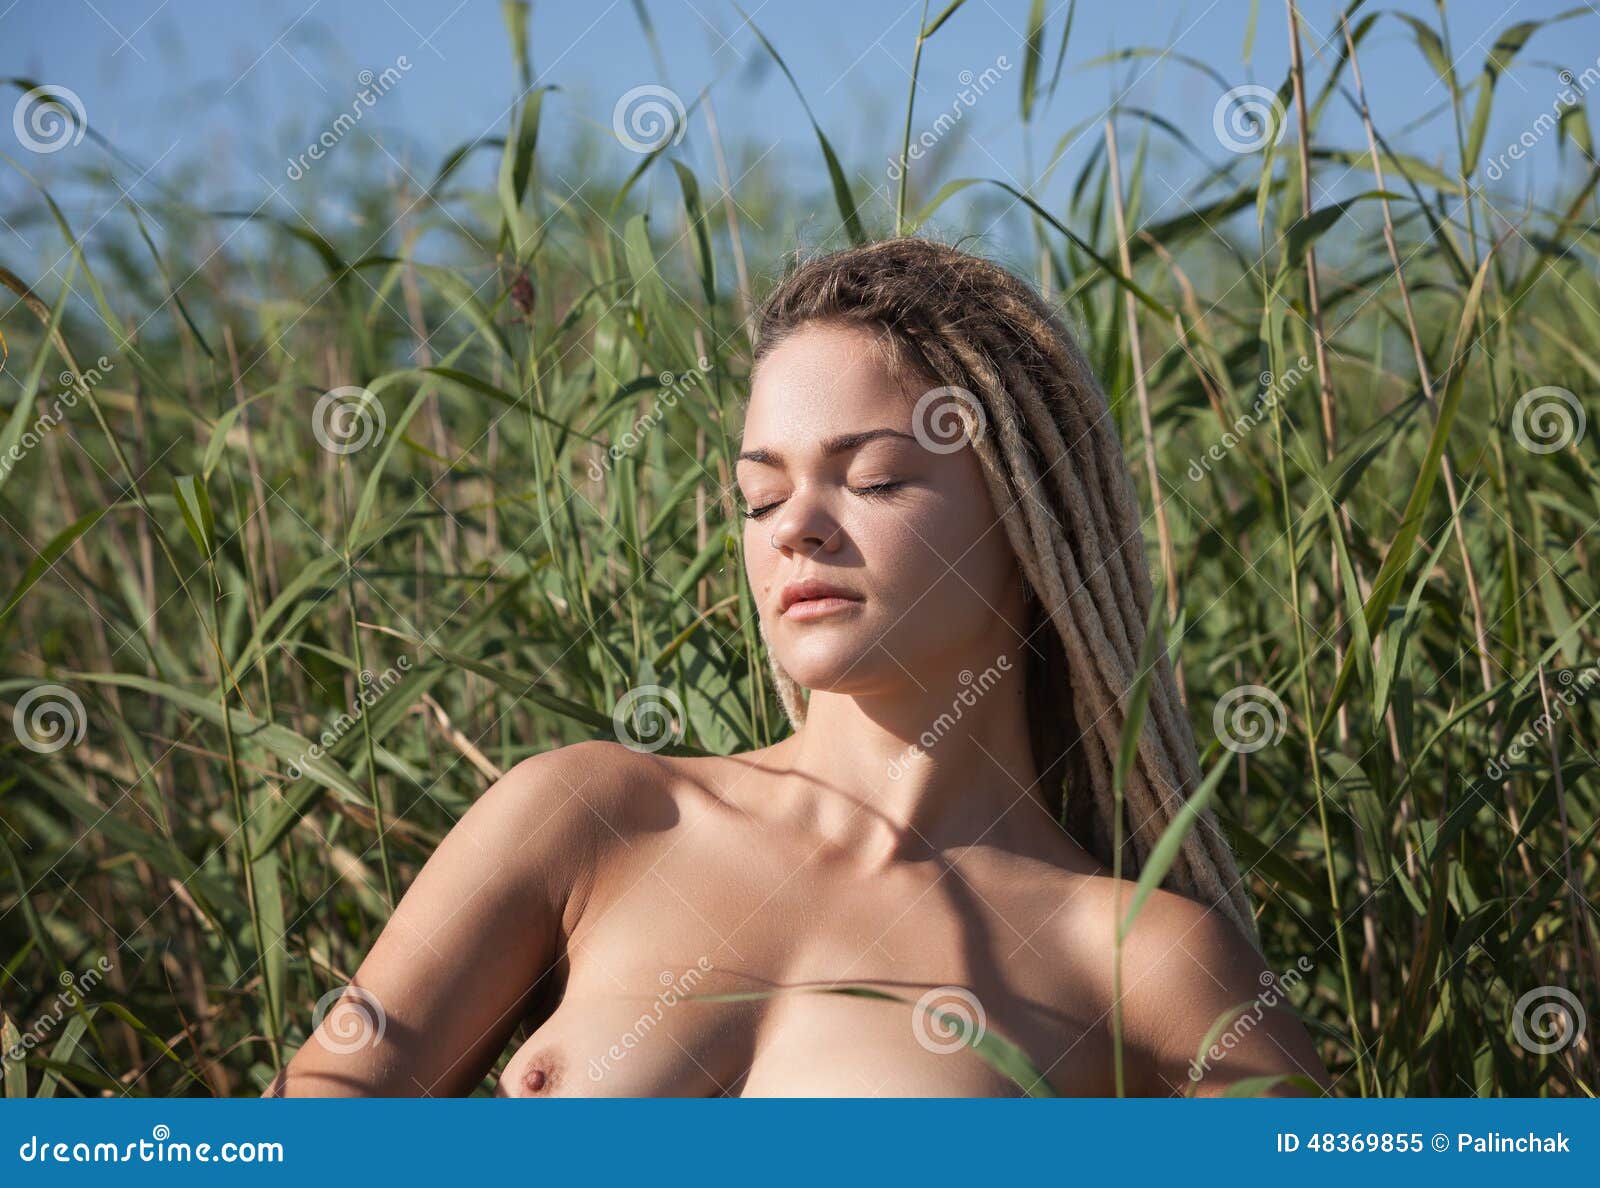 Nude Woman on Nature Background Stock Image - Image of sensuality,  naturist: 48369855